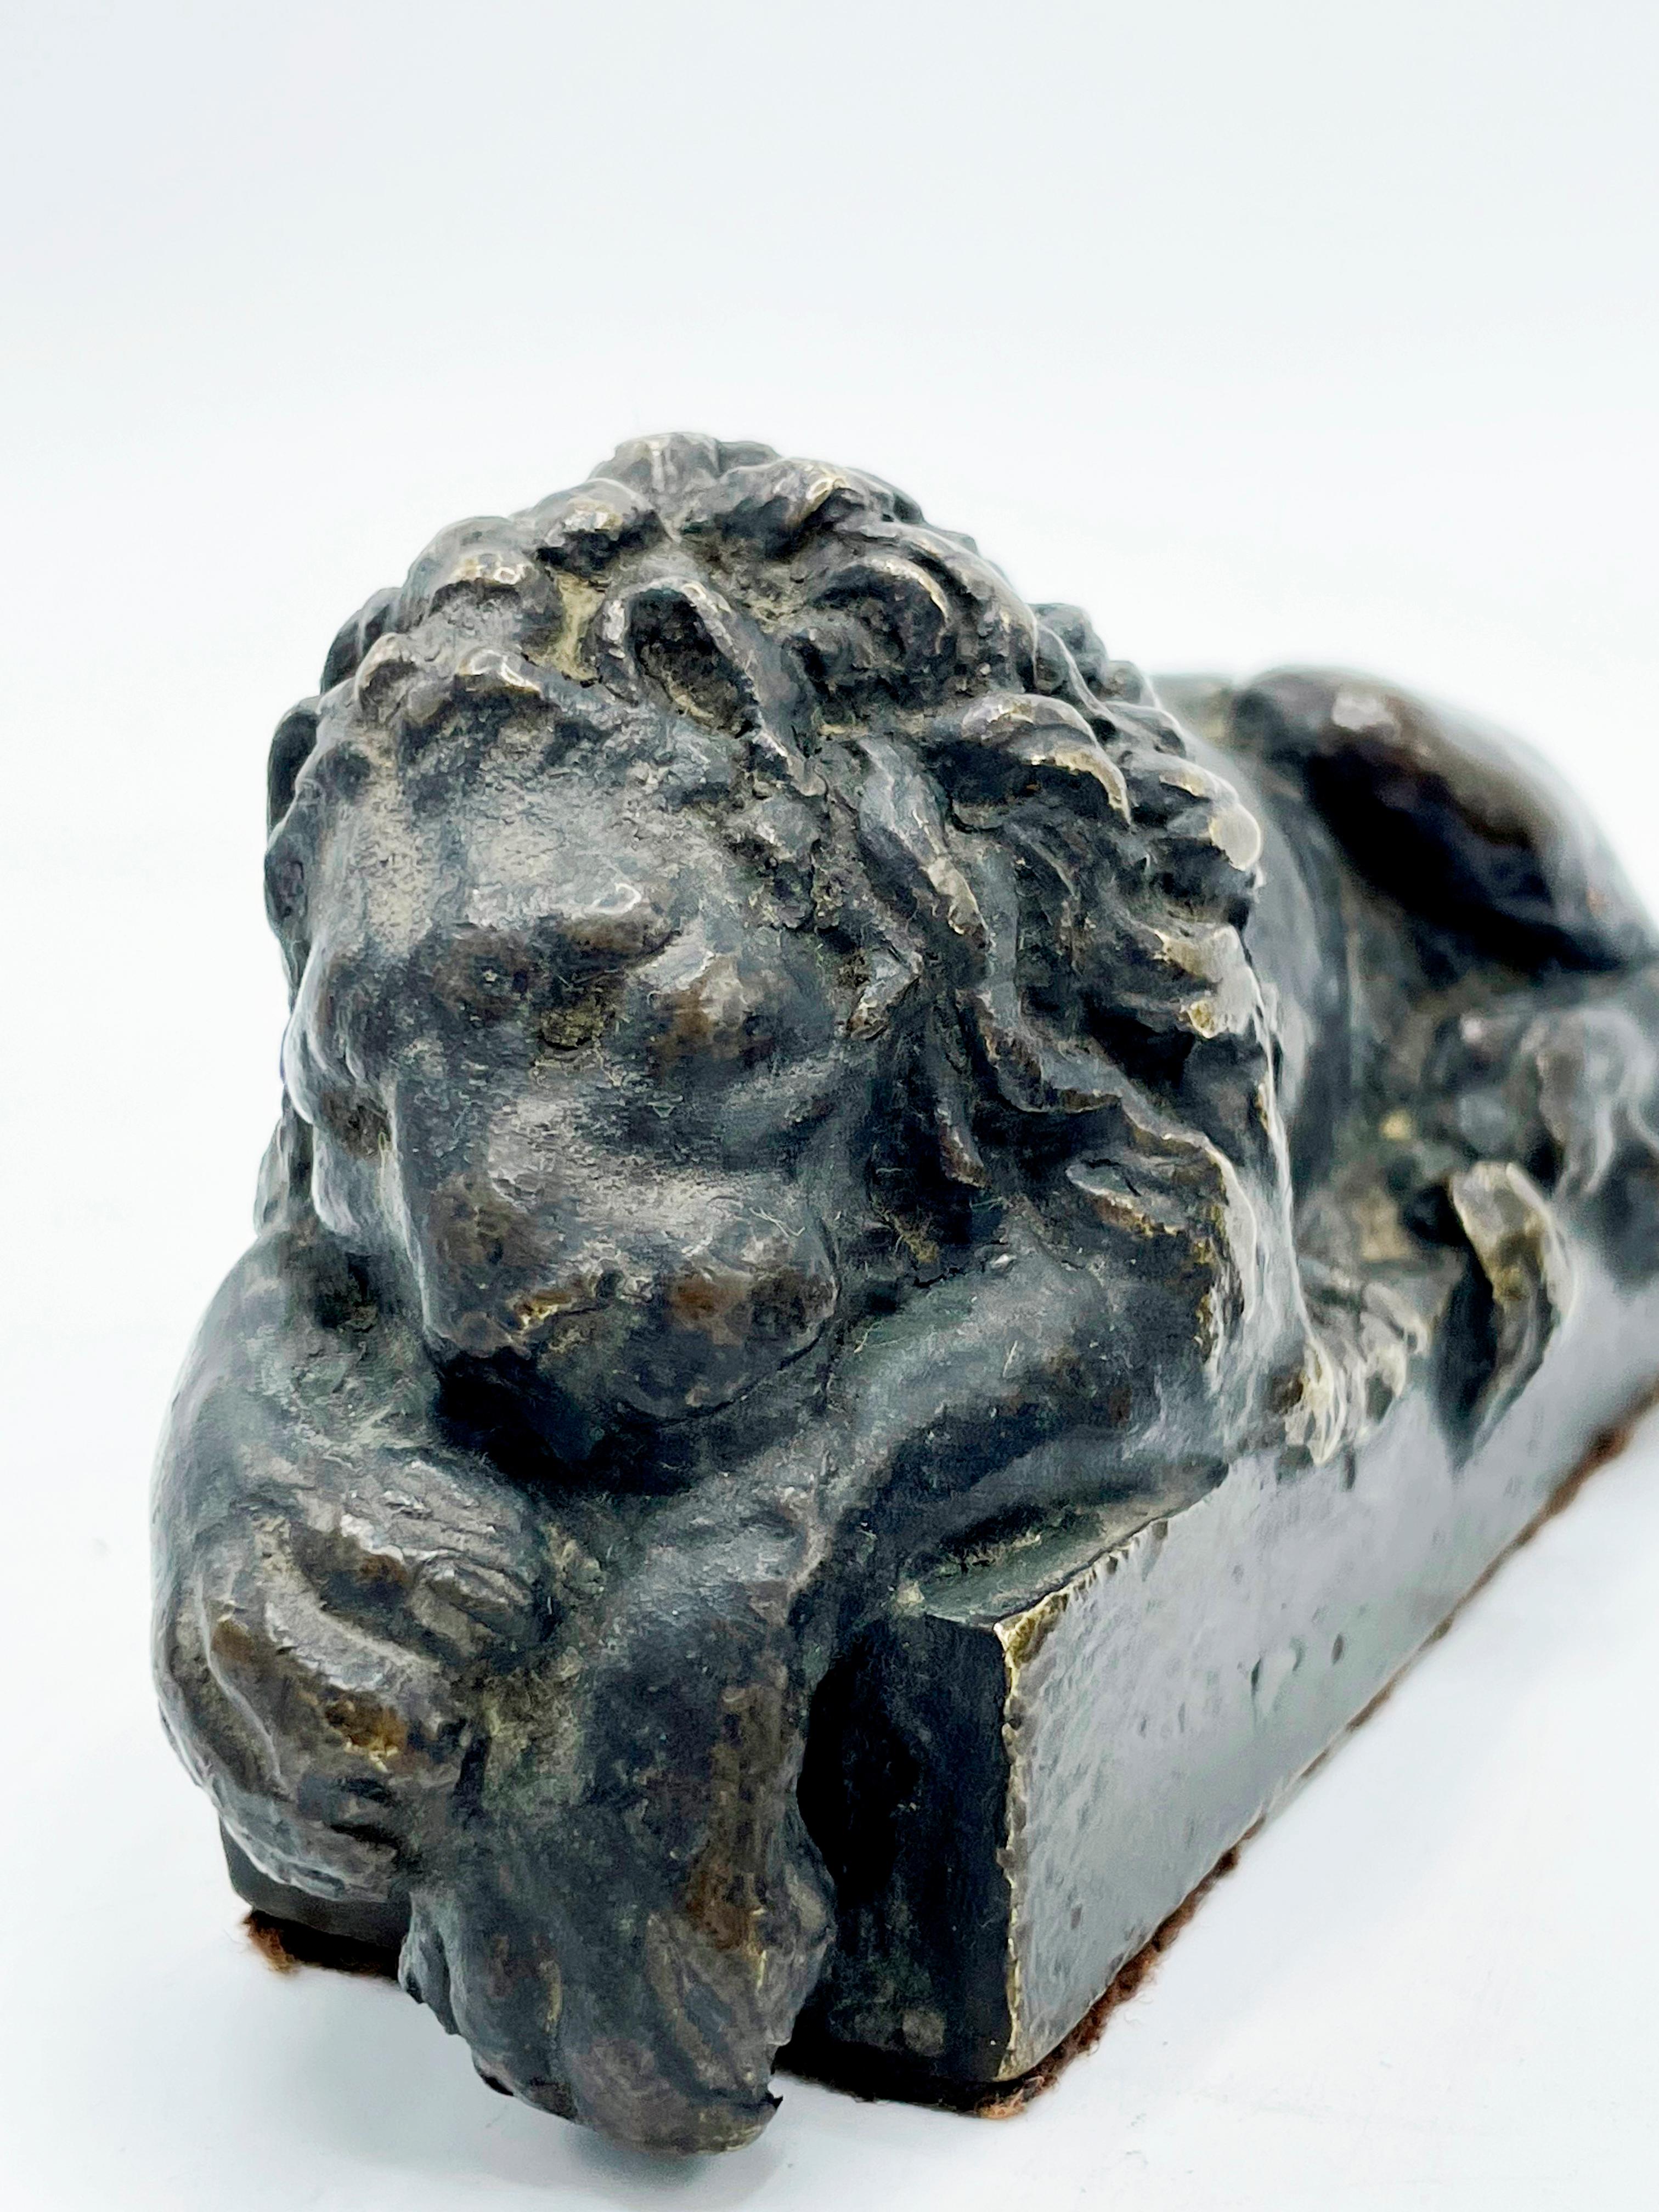 Italian Pair of Cast Sculptures Bronze Lions, after Antonio Canova, 19th Century For Sale